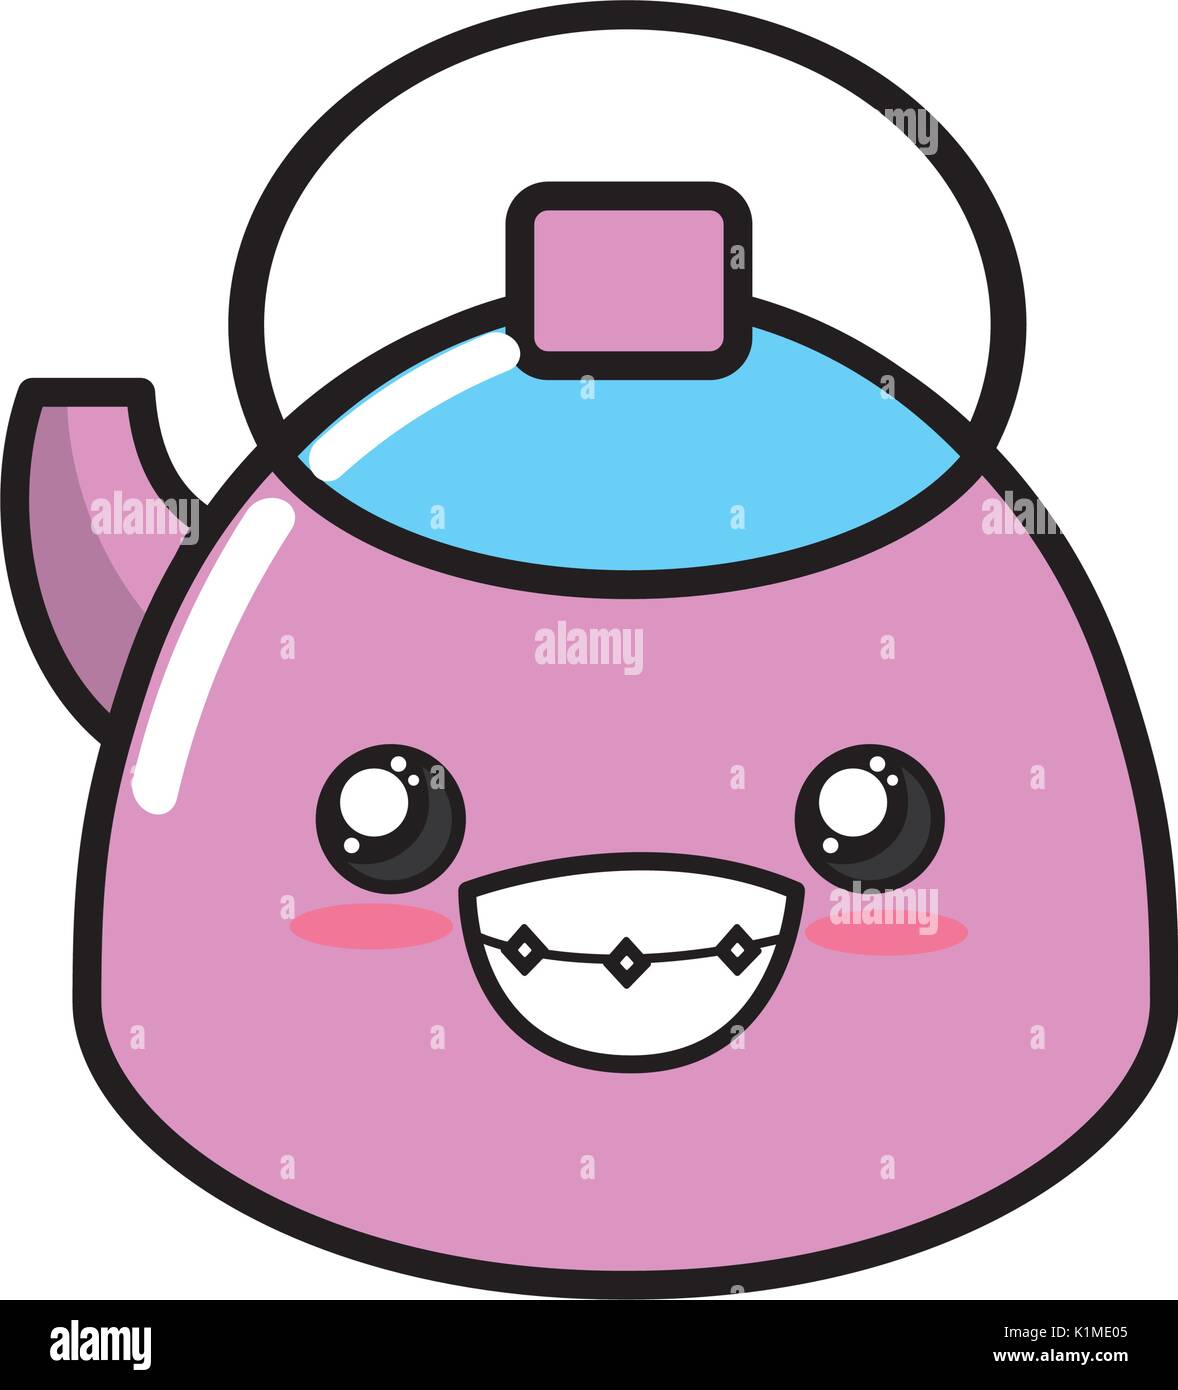 Kawaii Cute Tender Spatula Utensil Stock Illustration - Download